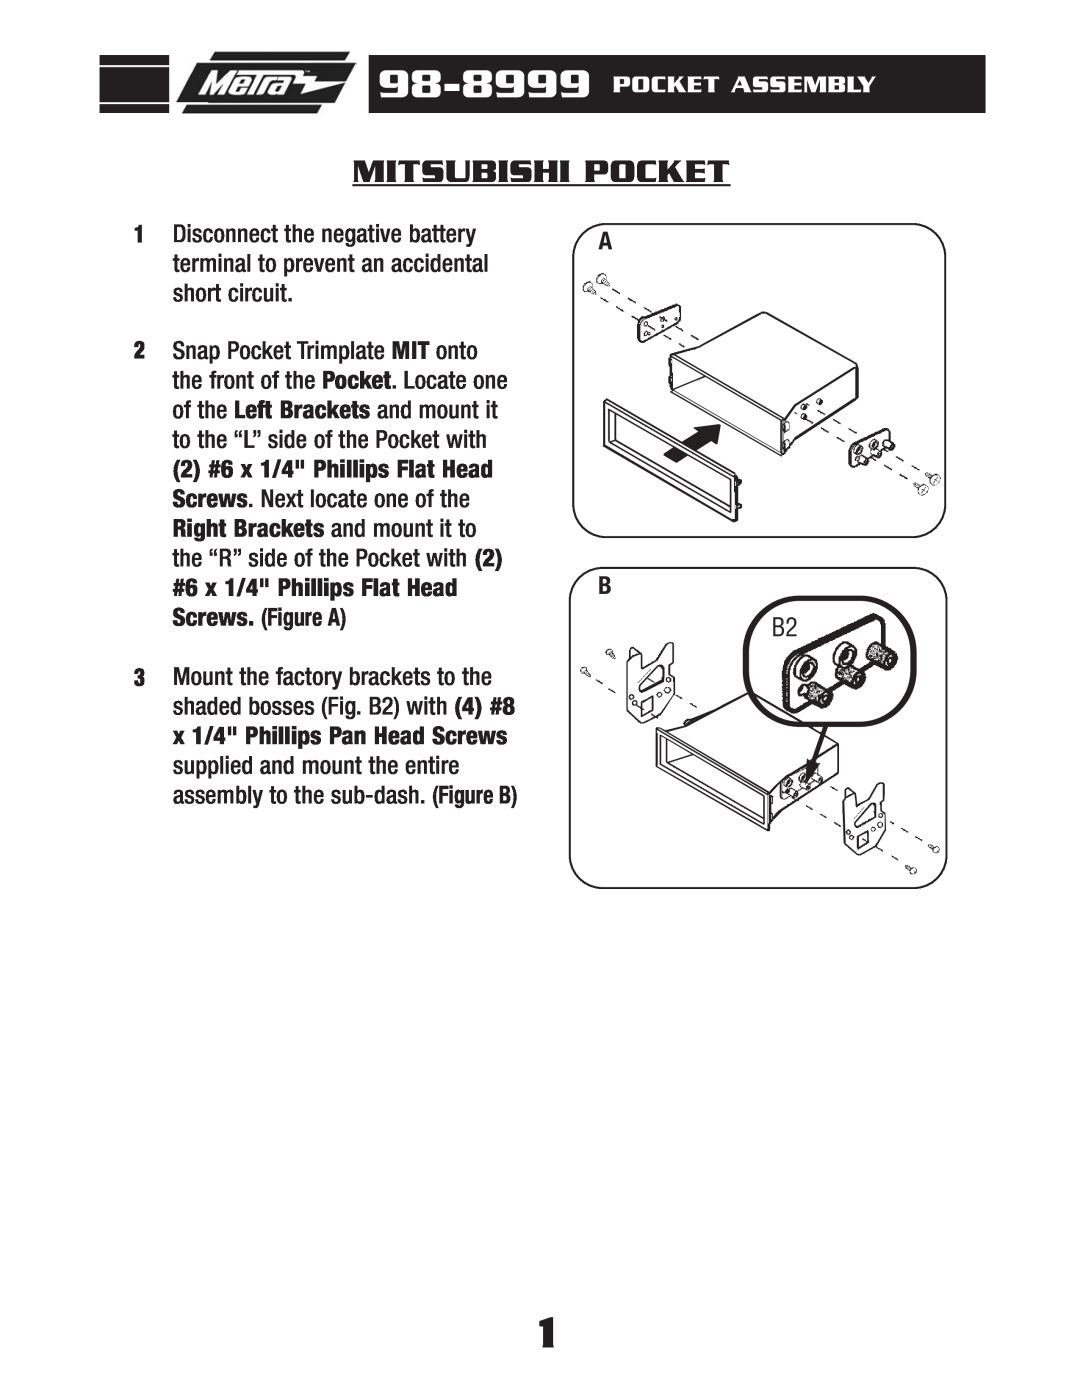 Metra Electronics 98-8999 installation instructions Mitsubishi Pocket, Pocket Assembly 